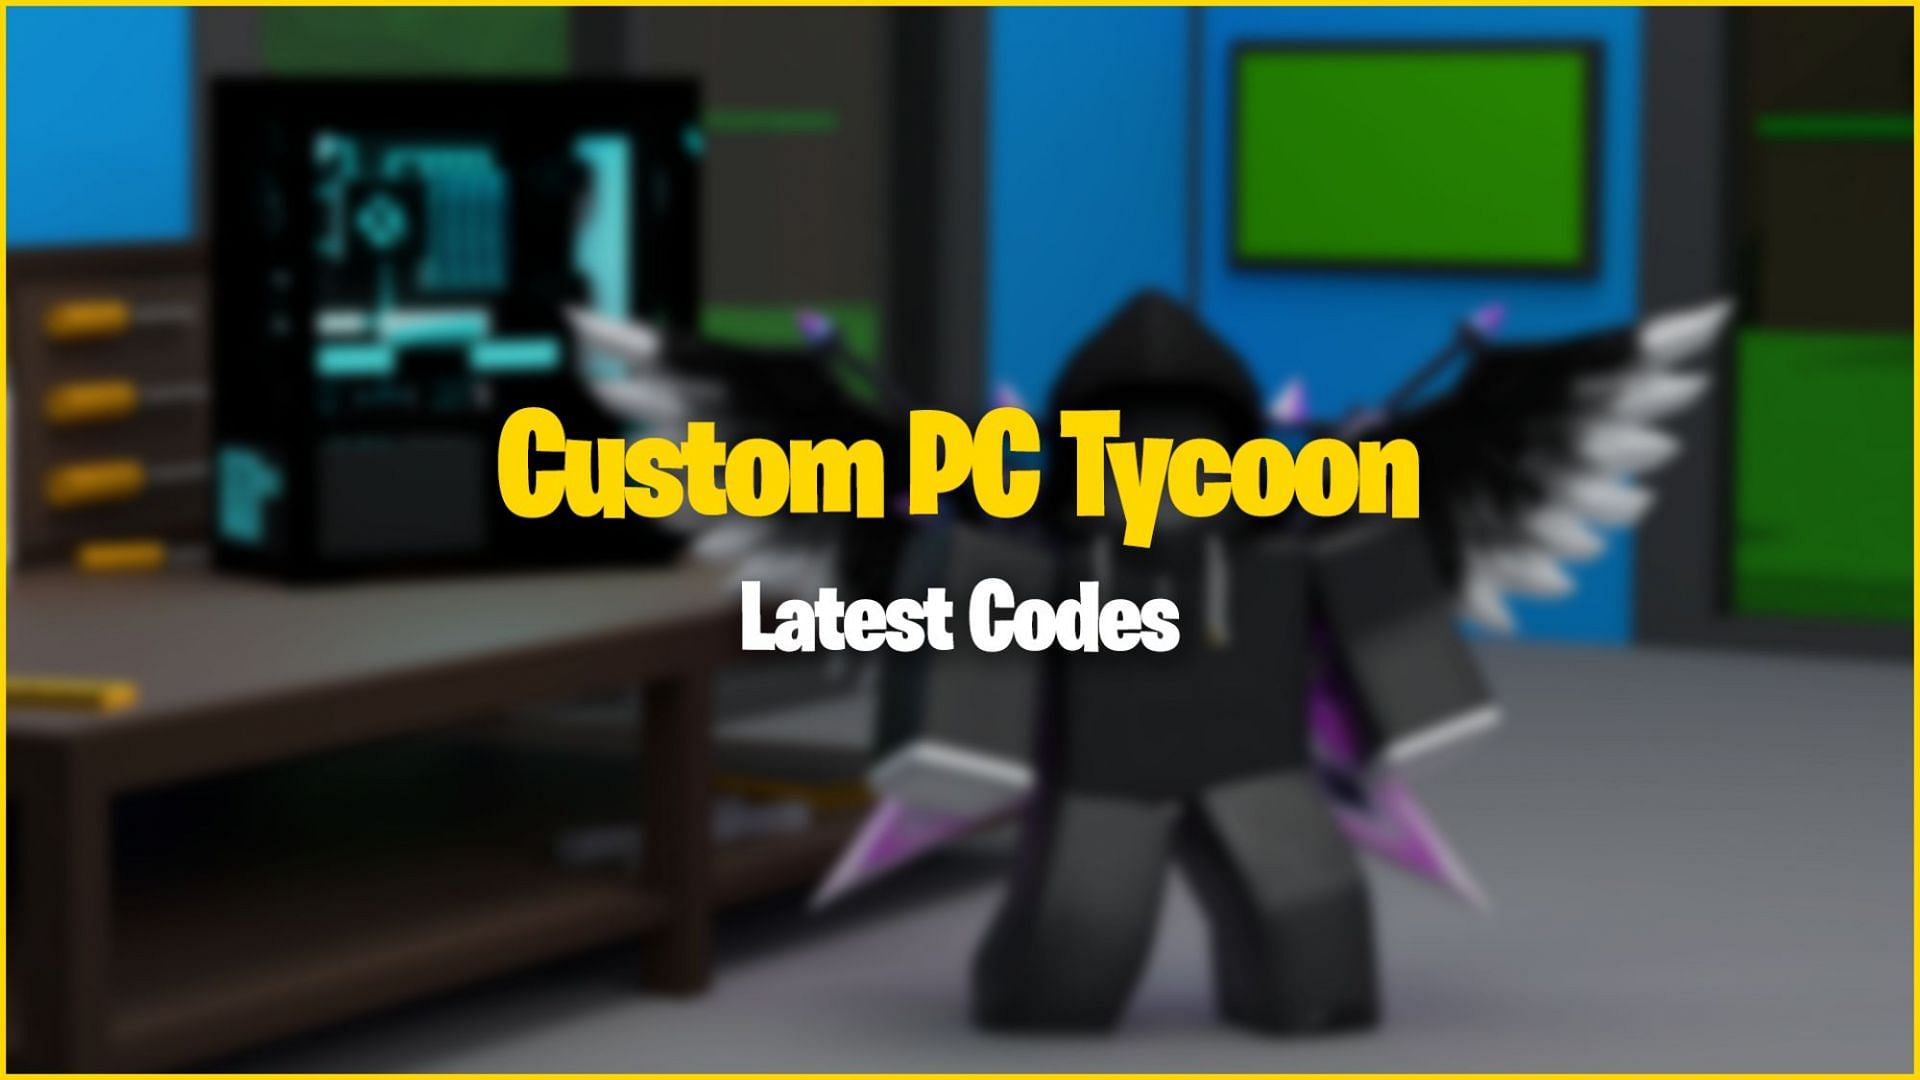 Codes for Roblox Custom Pc Tycoon (Image via Roblox)